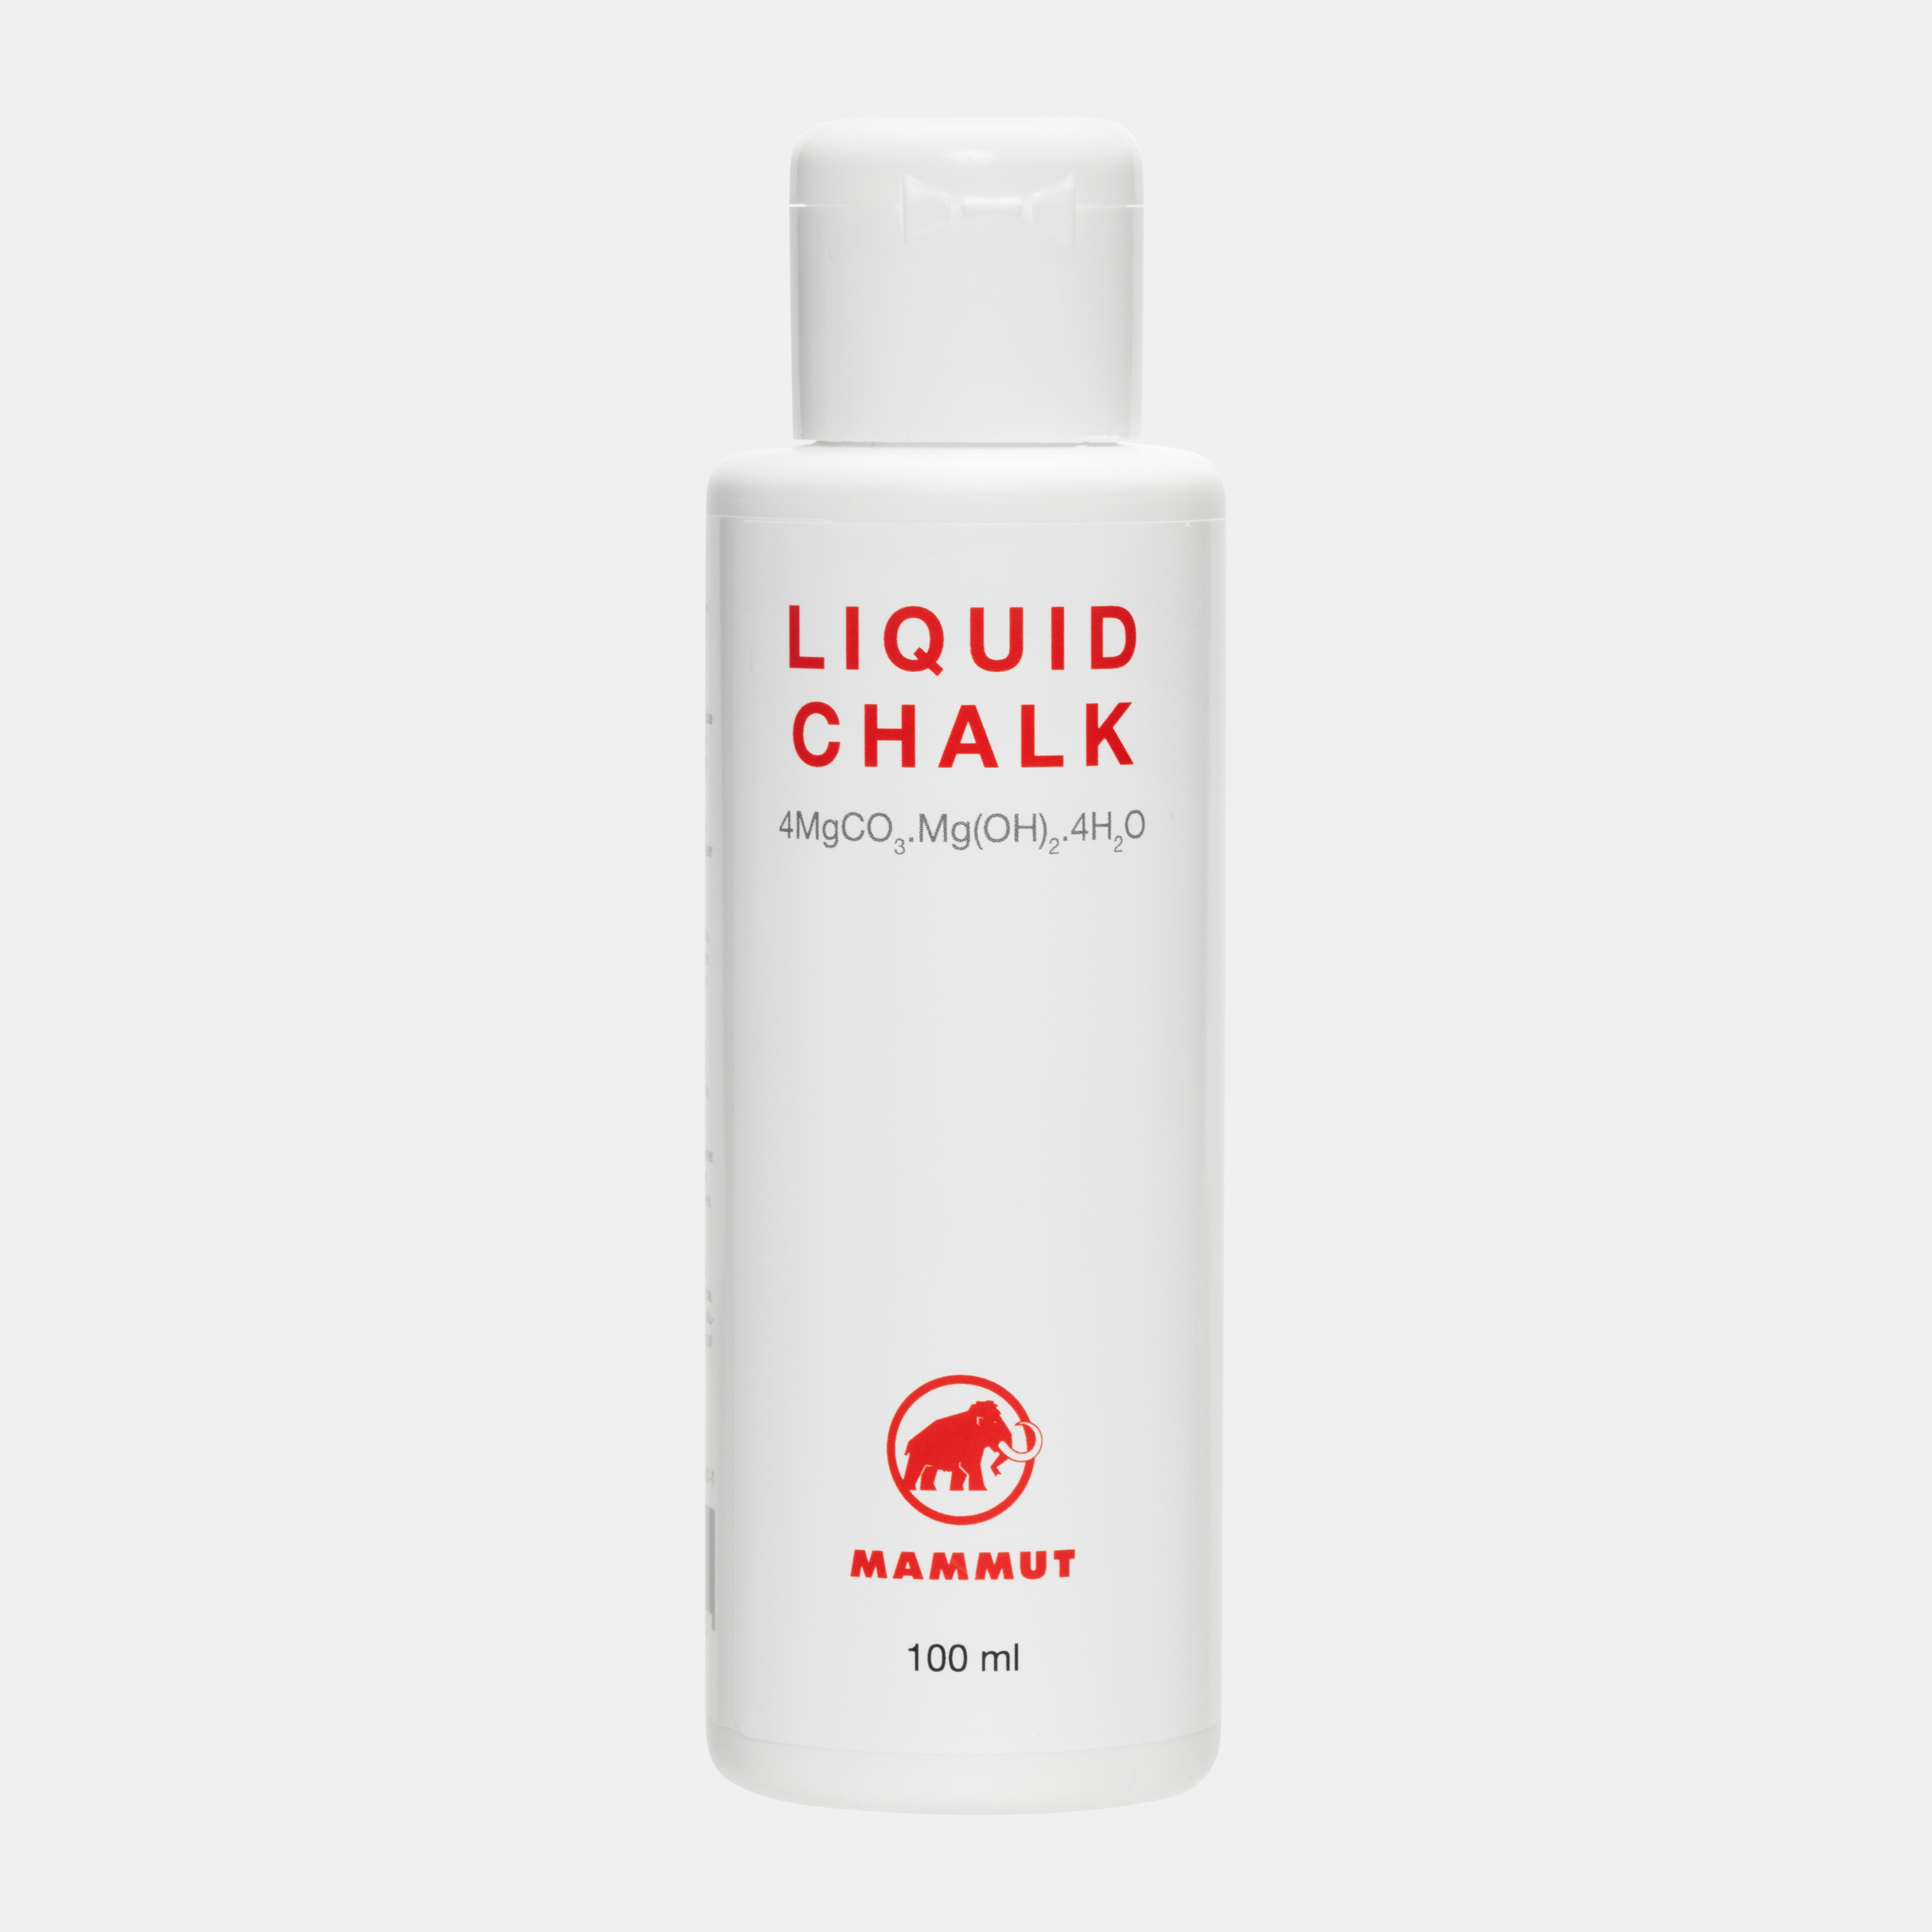 Liquid Chalk 100 ml product image